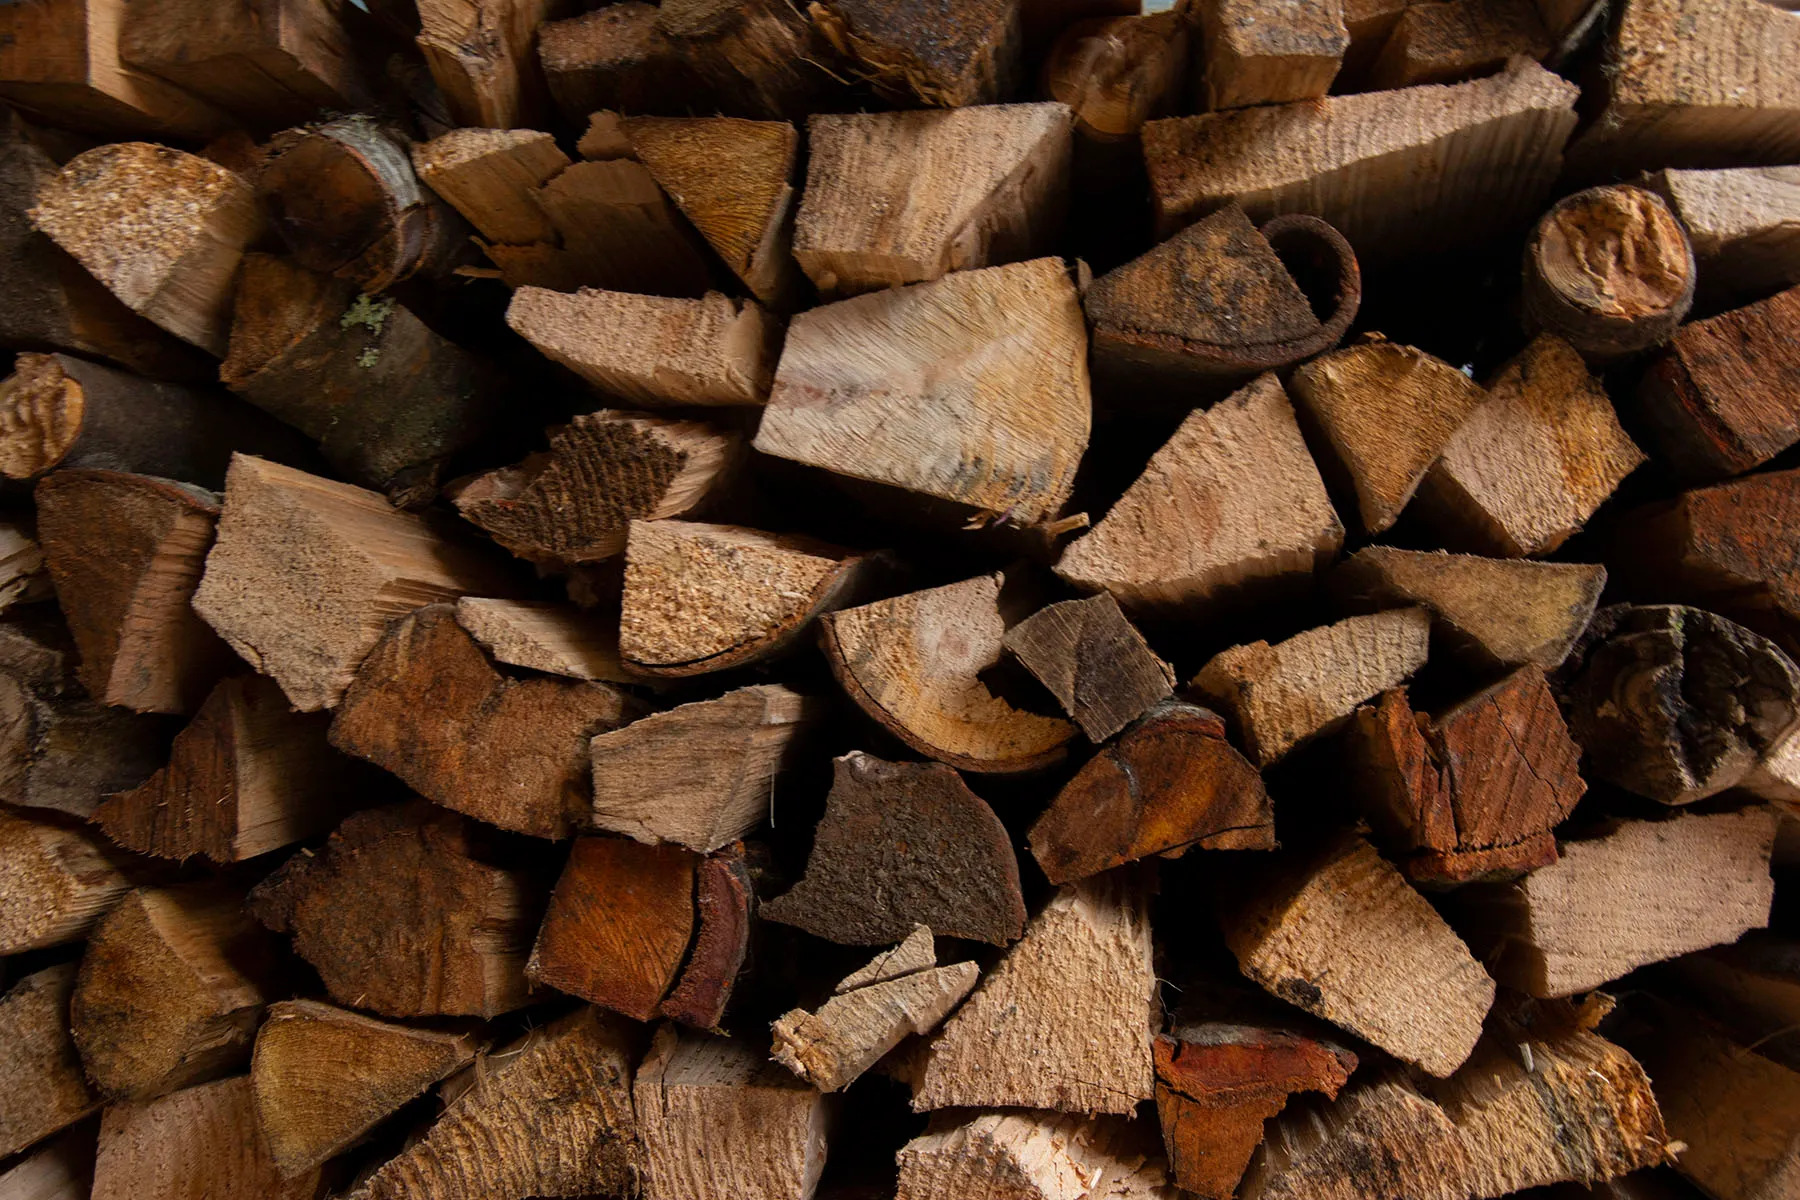 A pile of oak logs